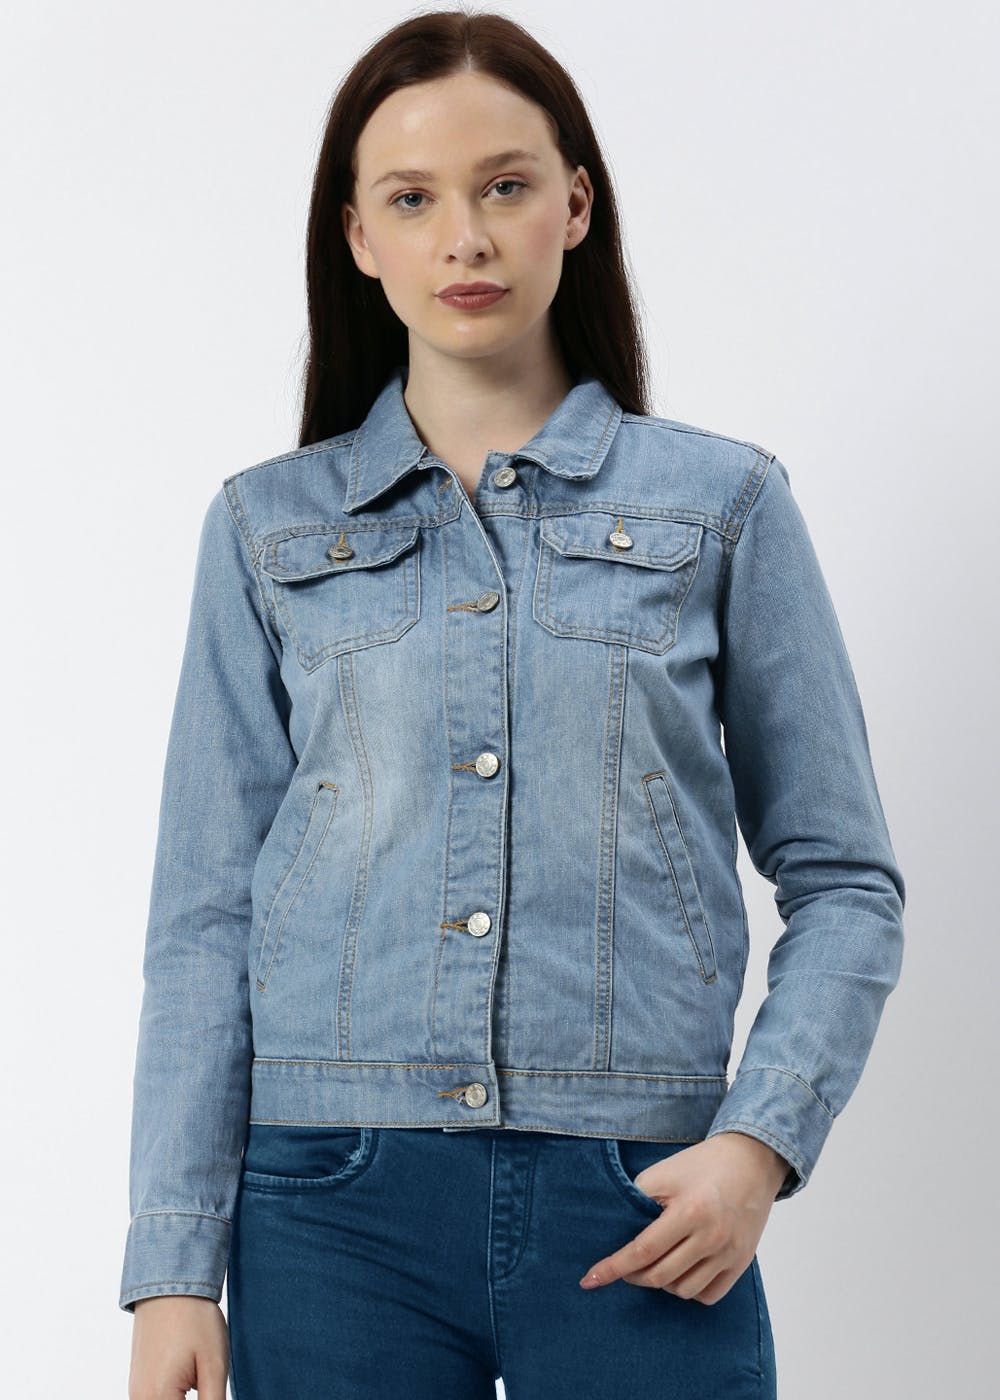 Women's Denim Jackets, Coats & Blazers | Just Jeans Online